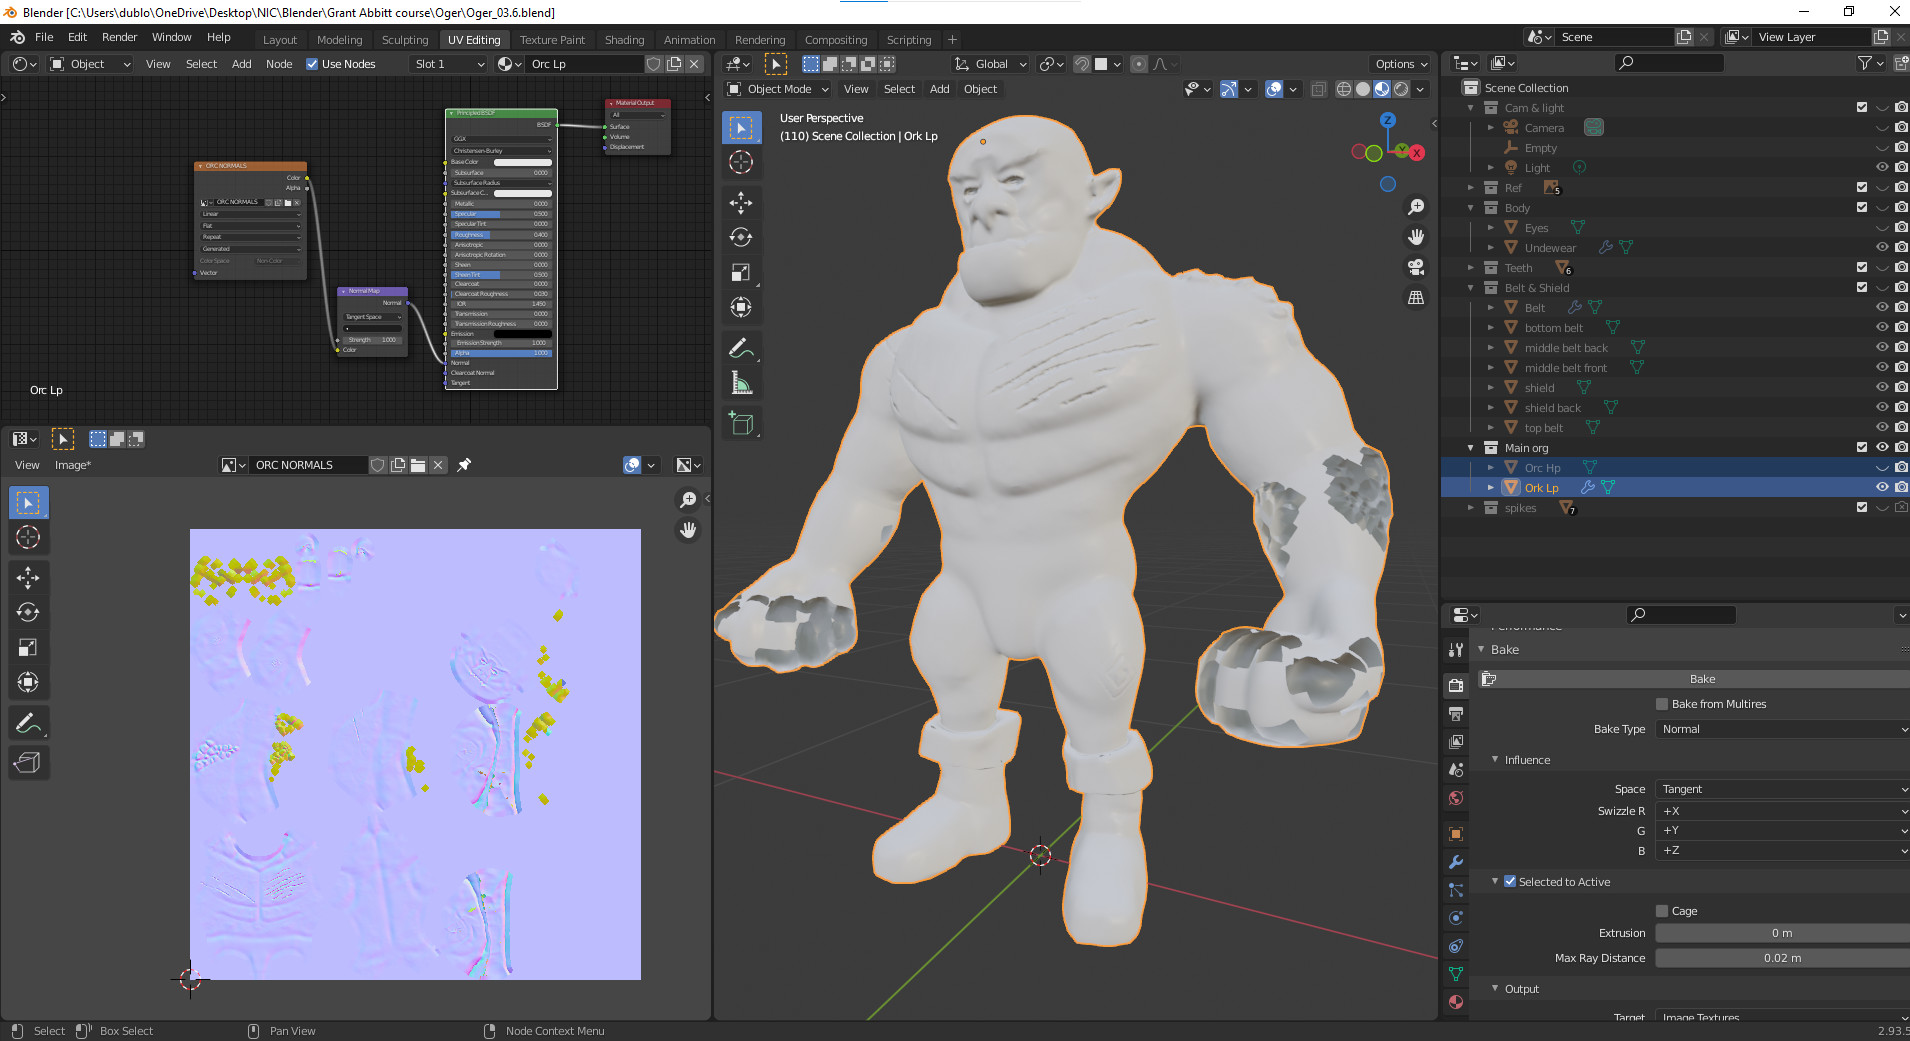 Character Creator: 3D Character Design Software